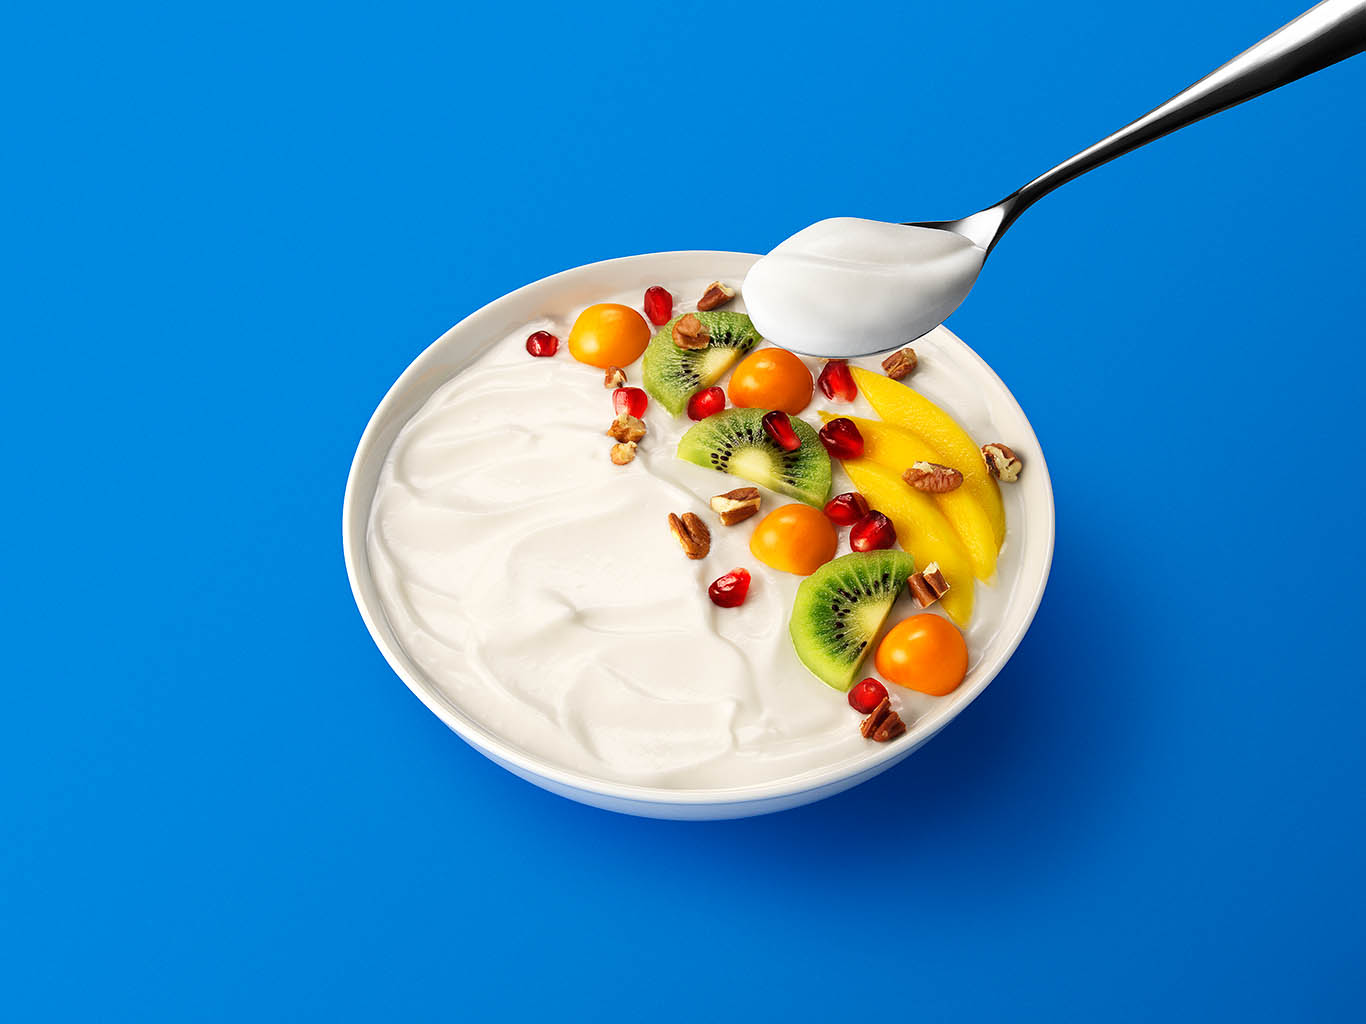 Packshot Factory - Snack - Koko yoghurt bowl with fruits